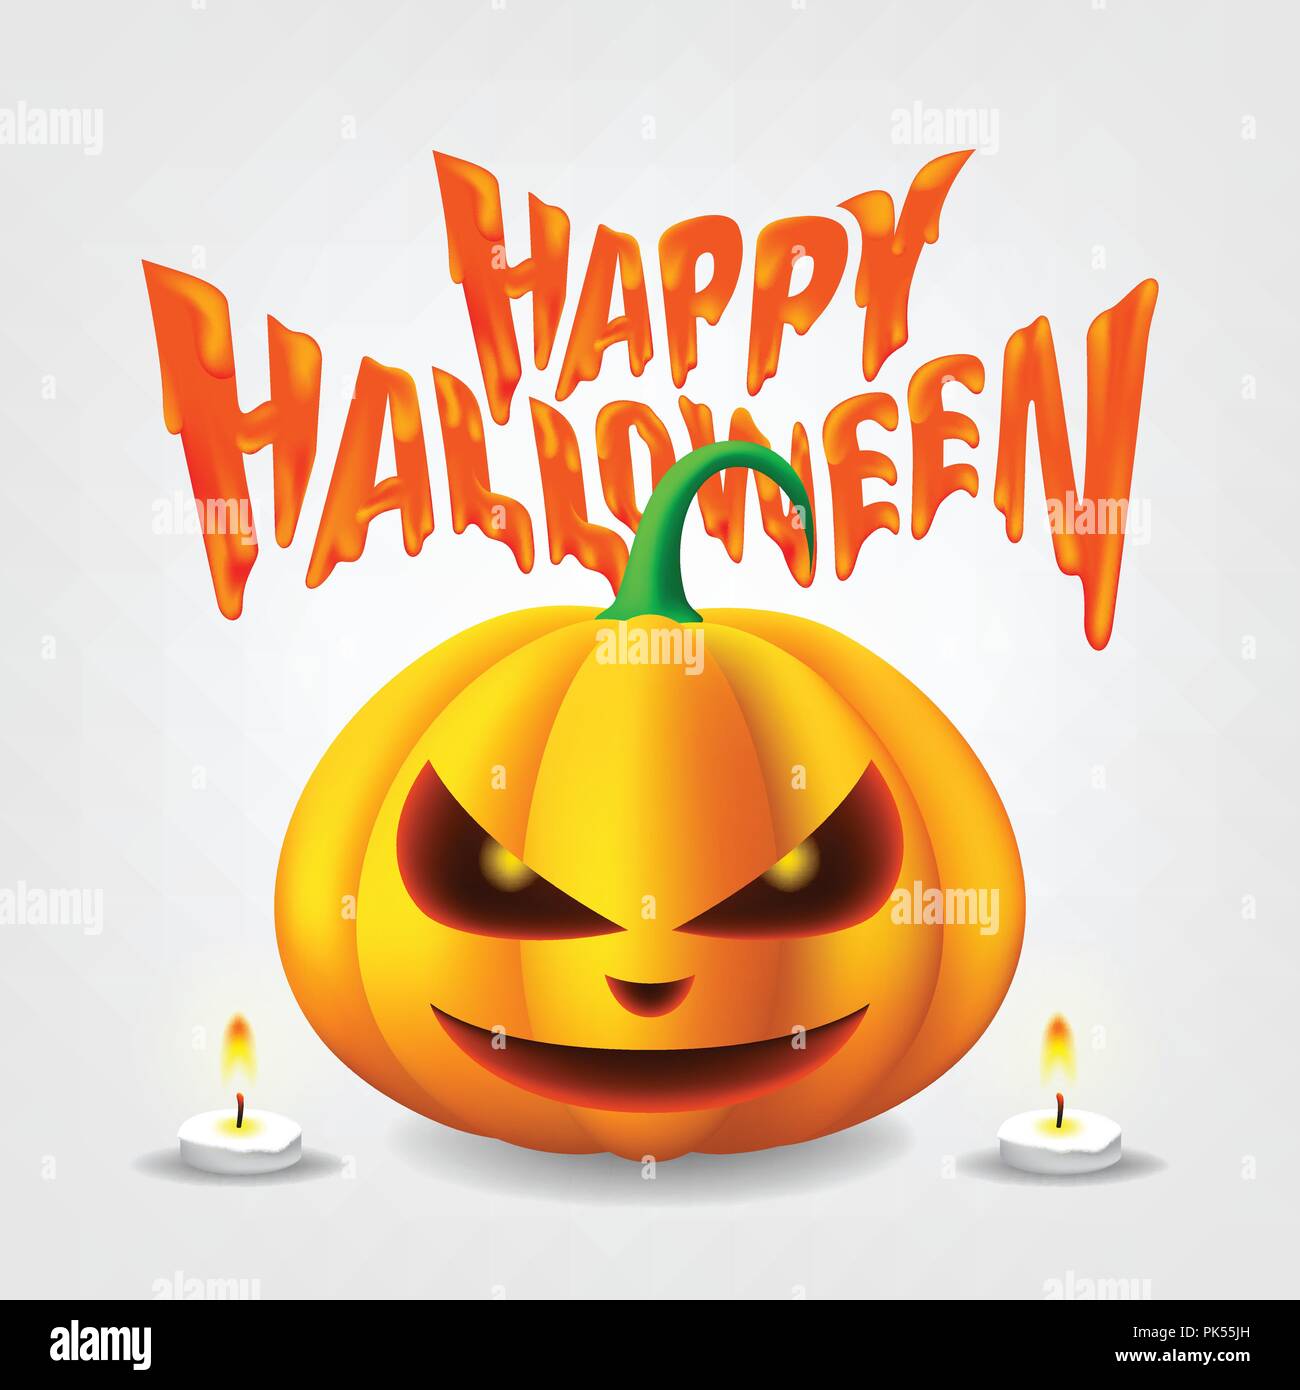 Ghost, Jack-o-lantern, Halloween, Boo! Scary Pumpkin Monster Fire